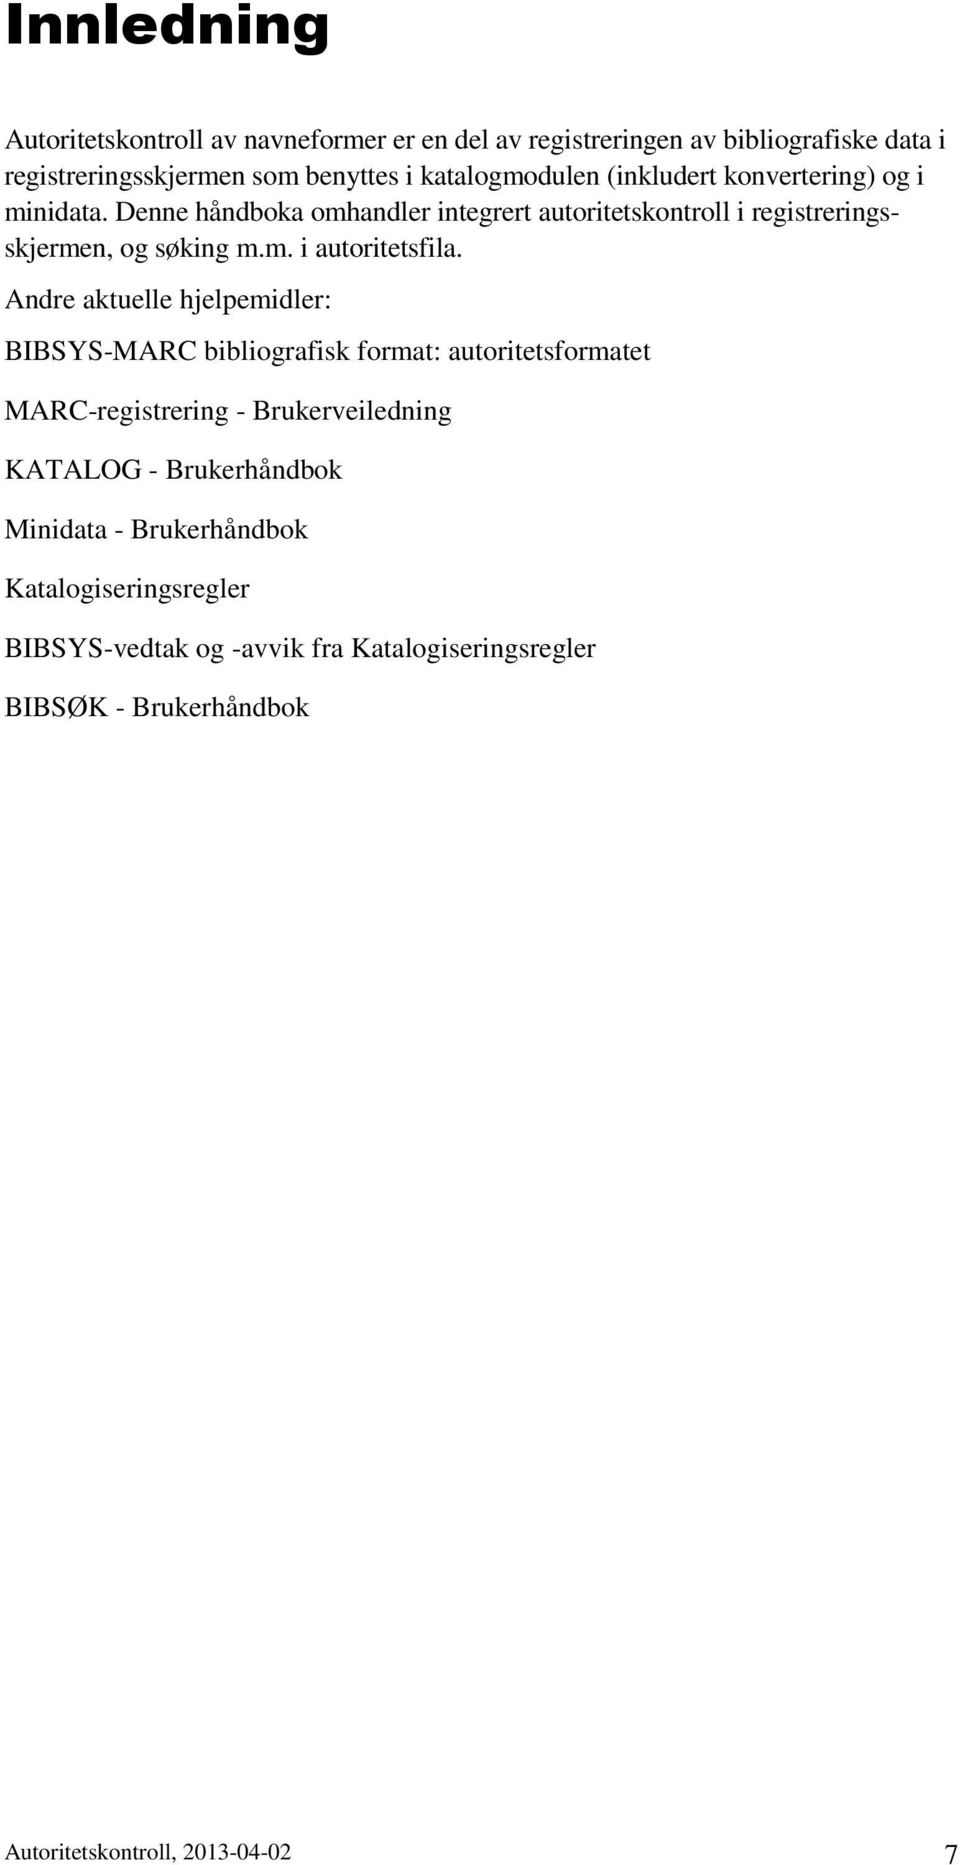 Andre aktuelle hjelpemidler BIBSYS-MARC bibliografisk format autoritetsformatet MARC-registrering - Brukerveiledning KATALOG - Brukerhåndbok